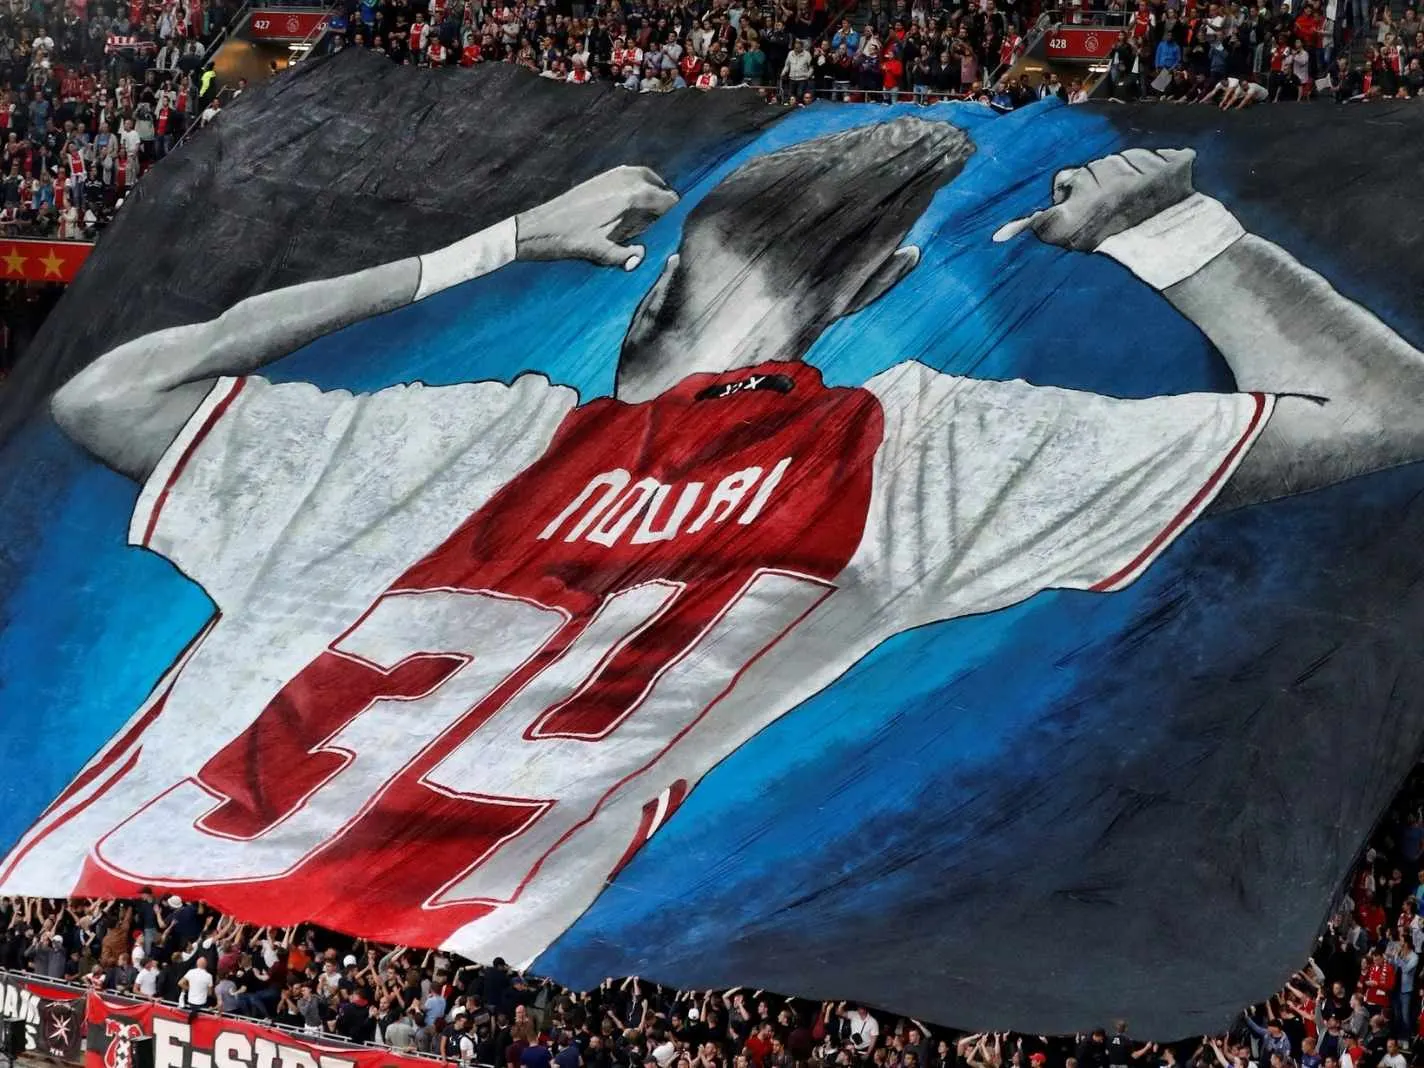 Ajax fans' banner for Nouri